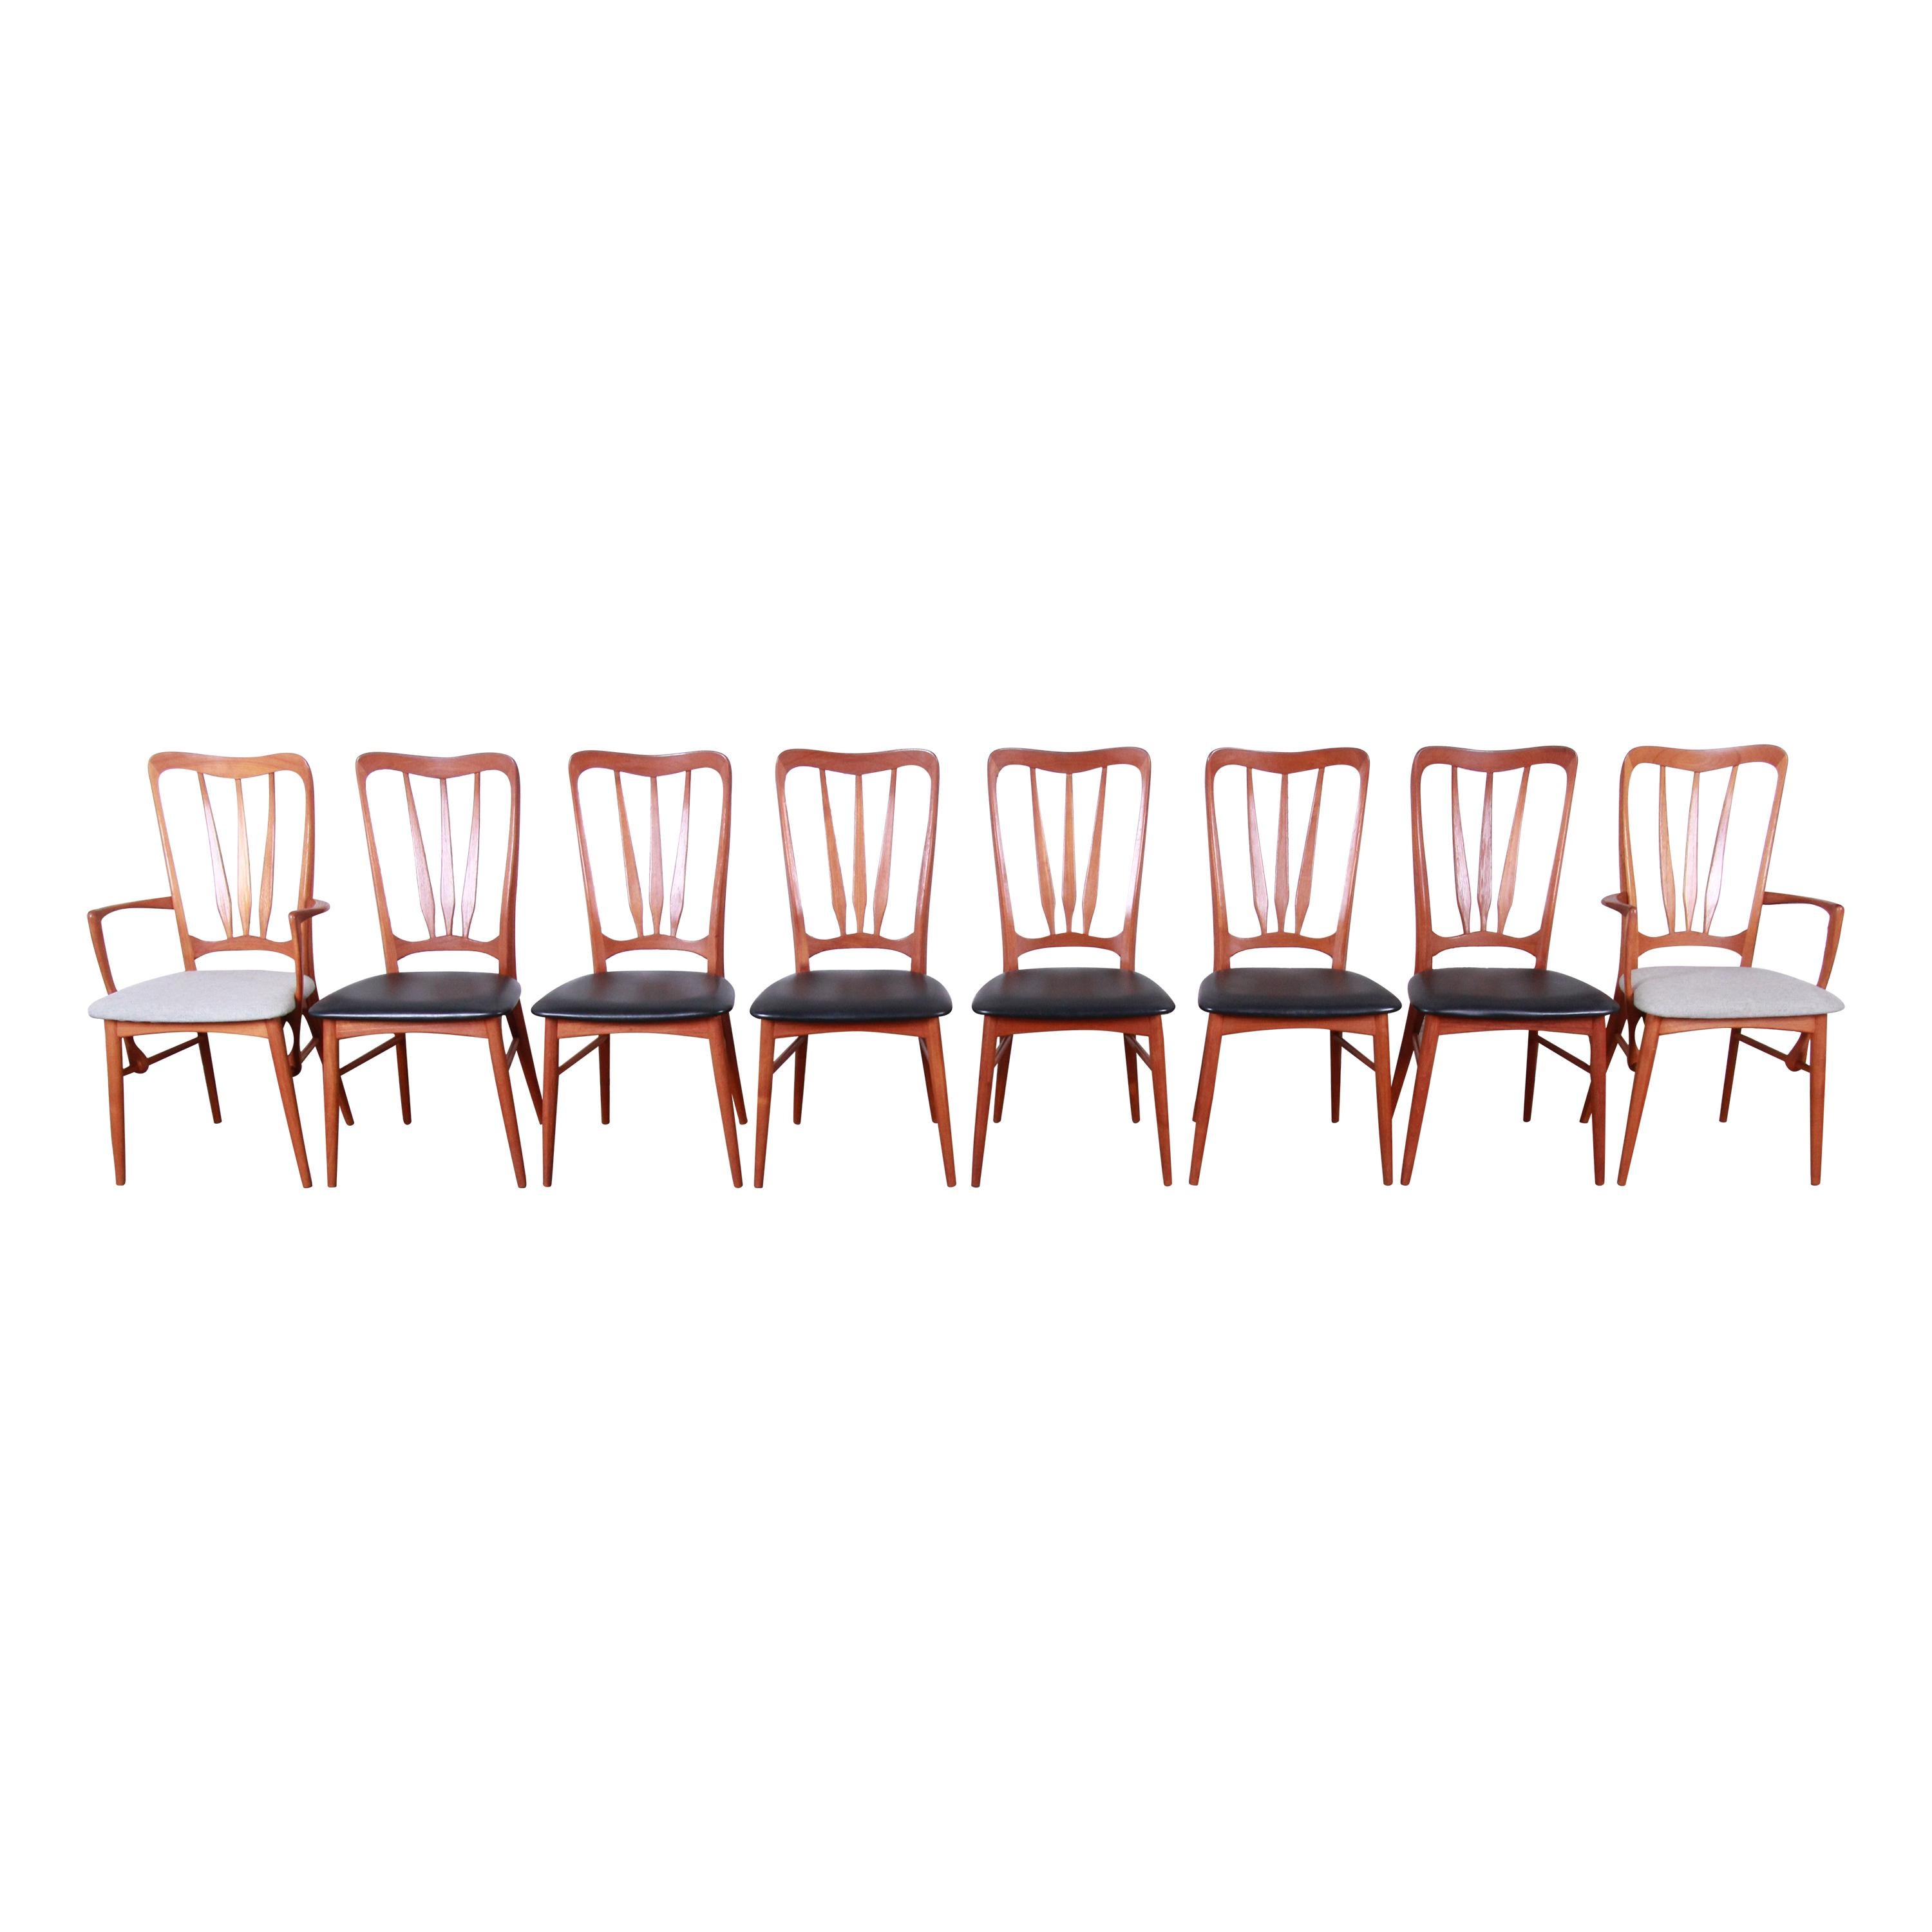 Niels Koefoed for Koefoeds Hornslet Danish Modern Teak Dining Chairs, Set of 8